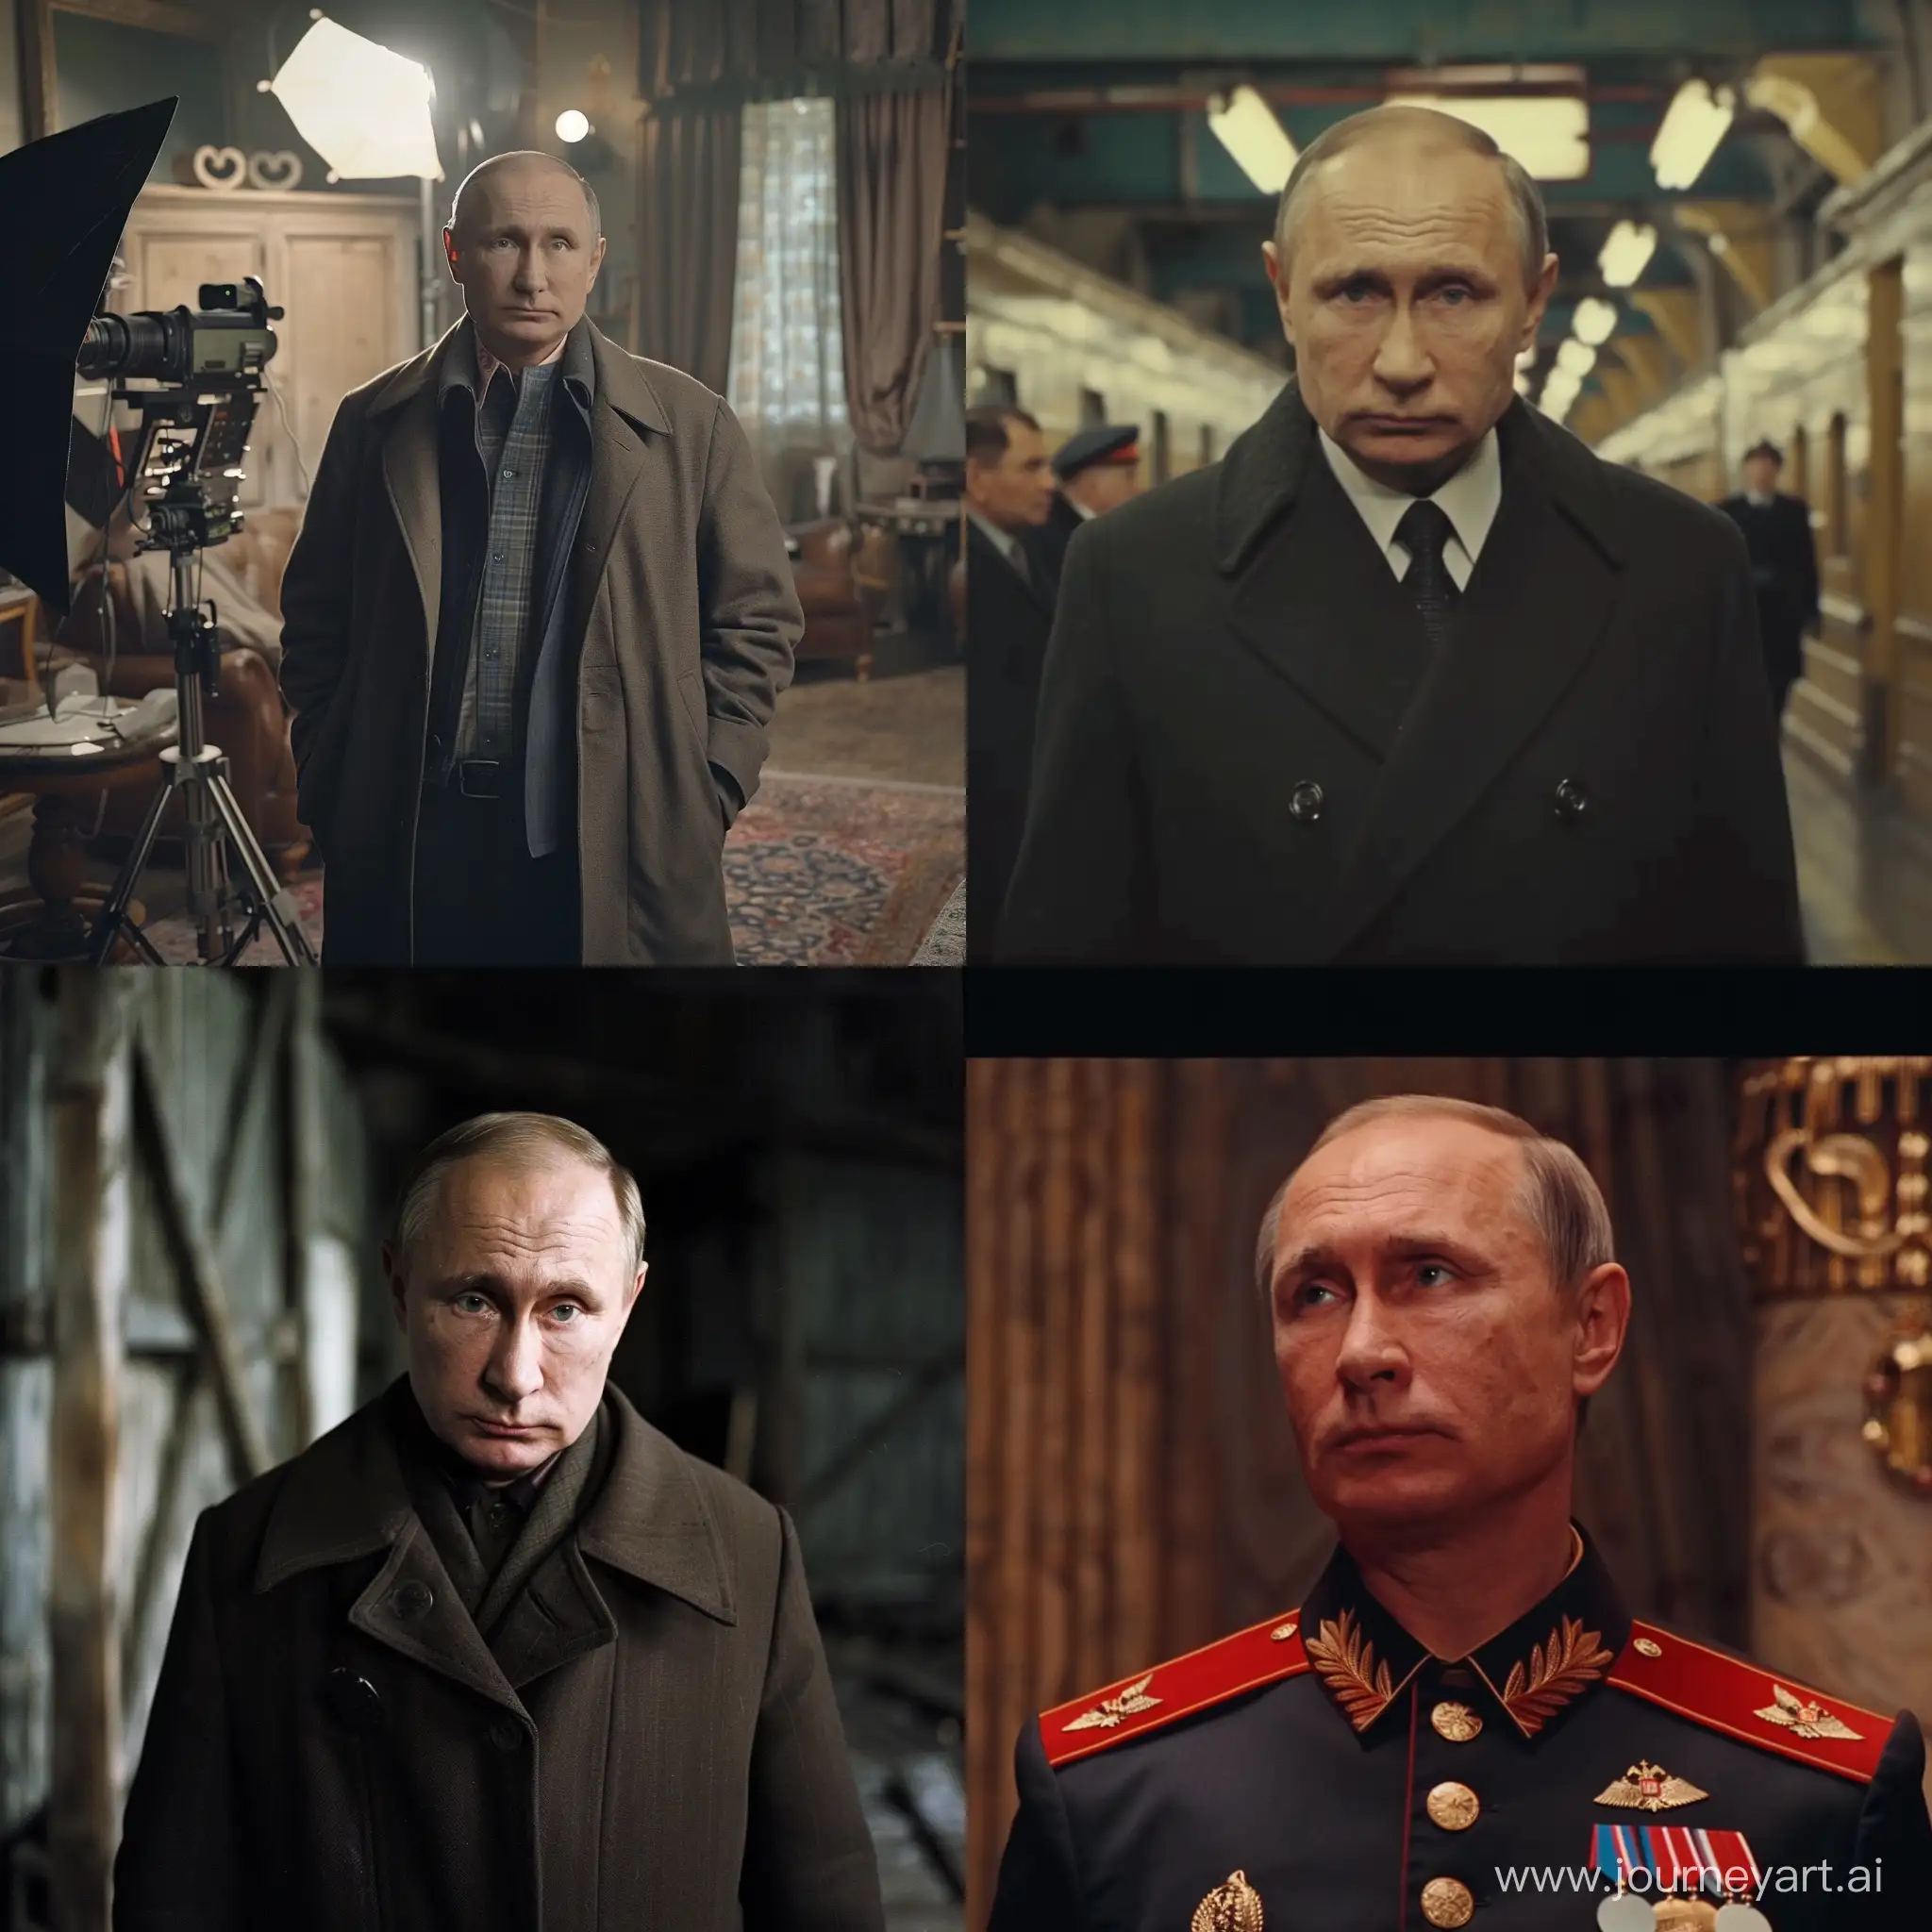 Vladimir Putin starring in a Soviet movie, a still from the movie Realism.